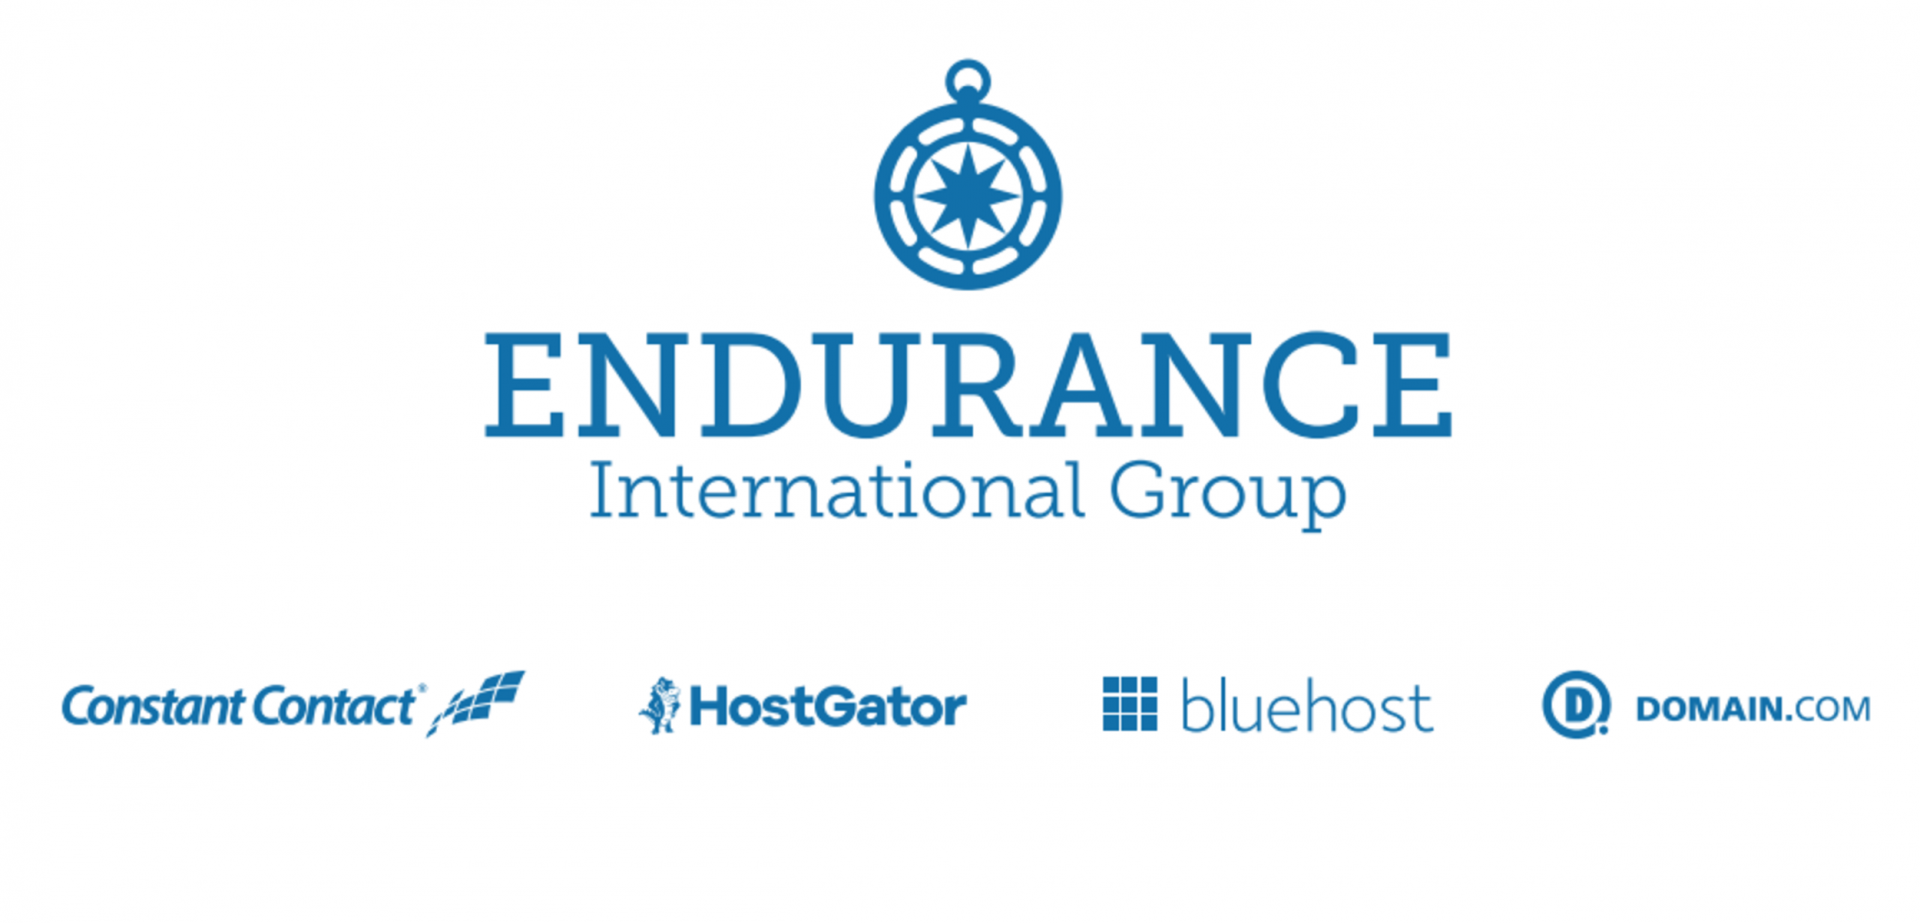 Endurance фирма. Балтик Гроуп Интернешнл. Beaulieu International Group логотип. Fletcher Group holdings логотип. Фирма домен